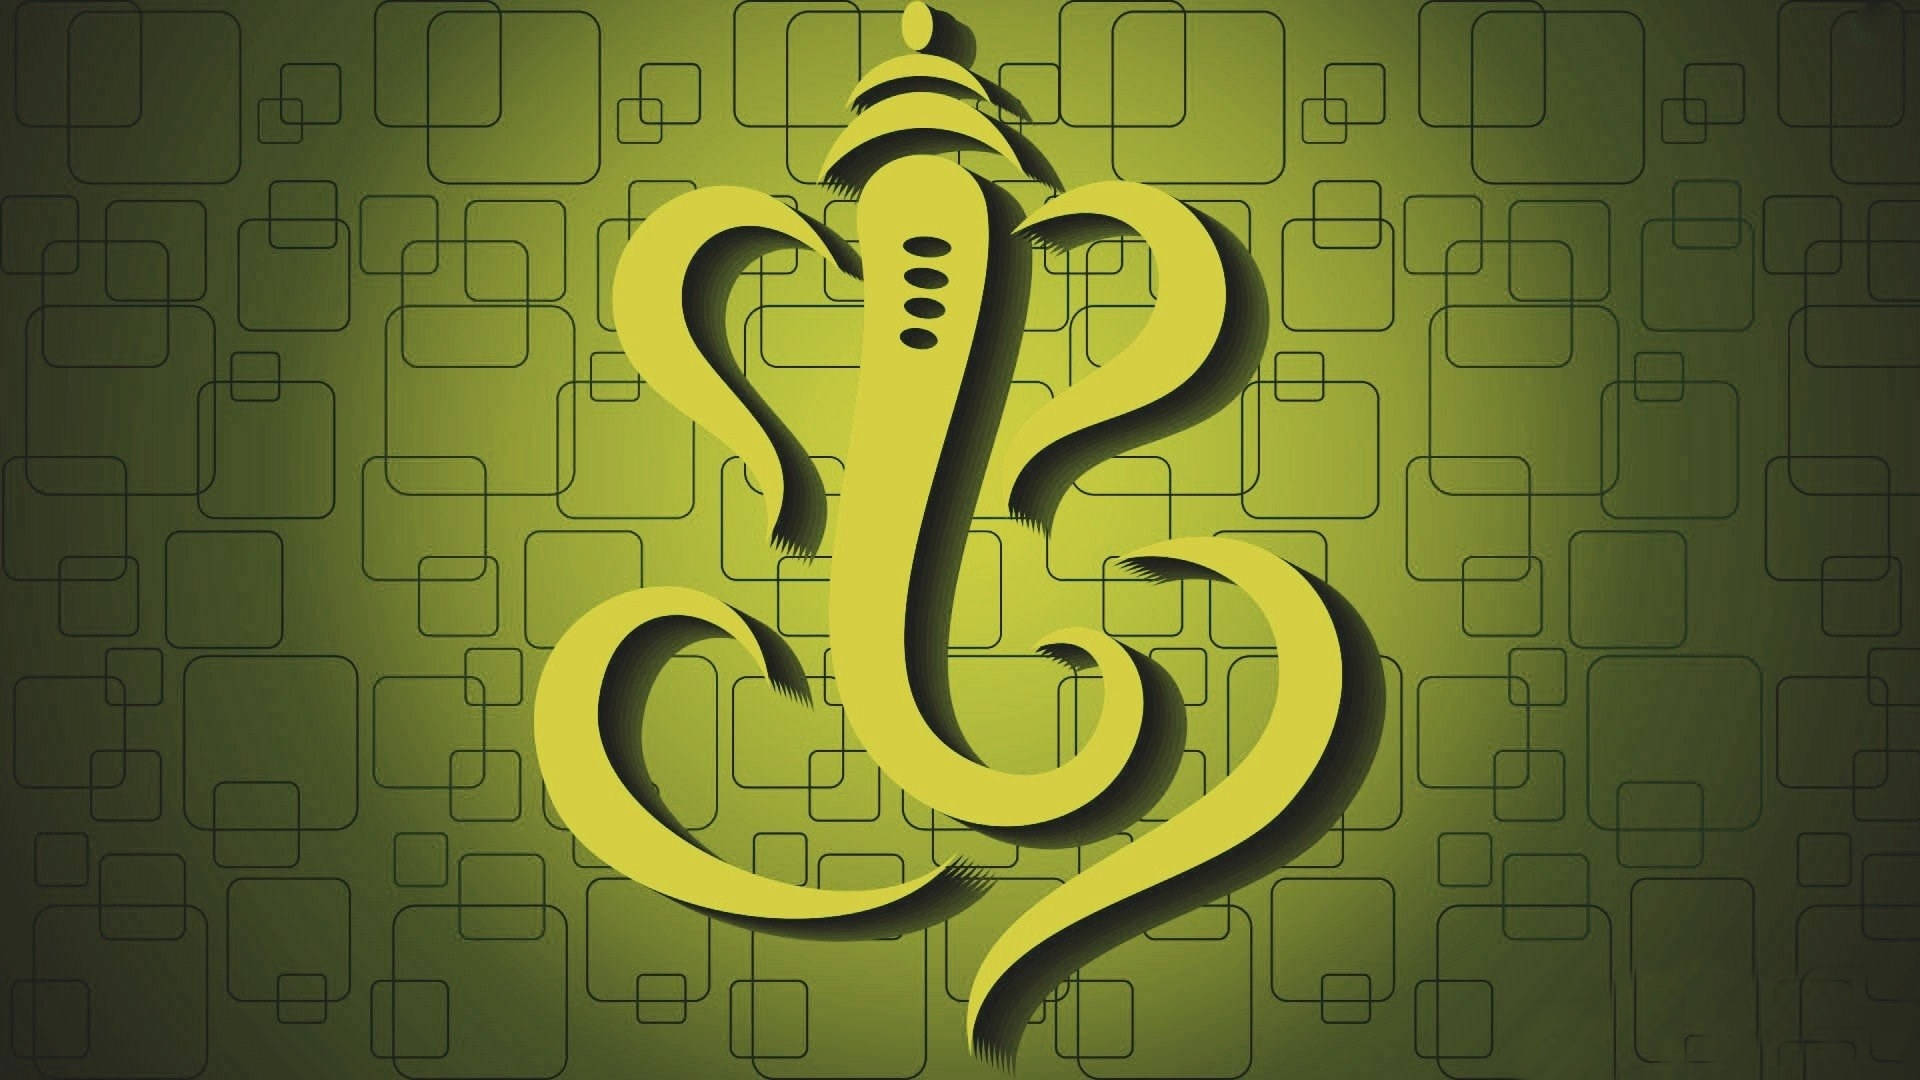 Free Ganesh Desktop Wallpaper Downloads, [100+] Ganesh Desktop Wallpapers  for FREE 